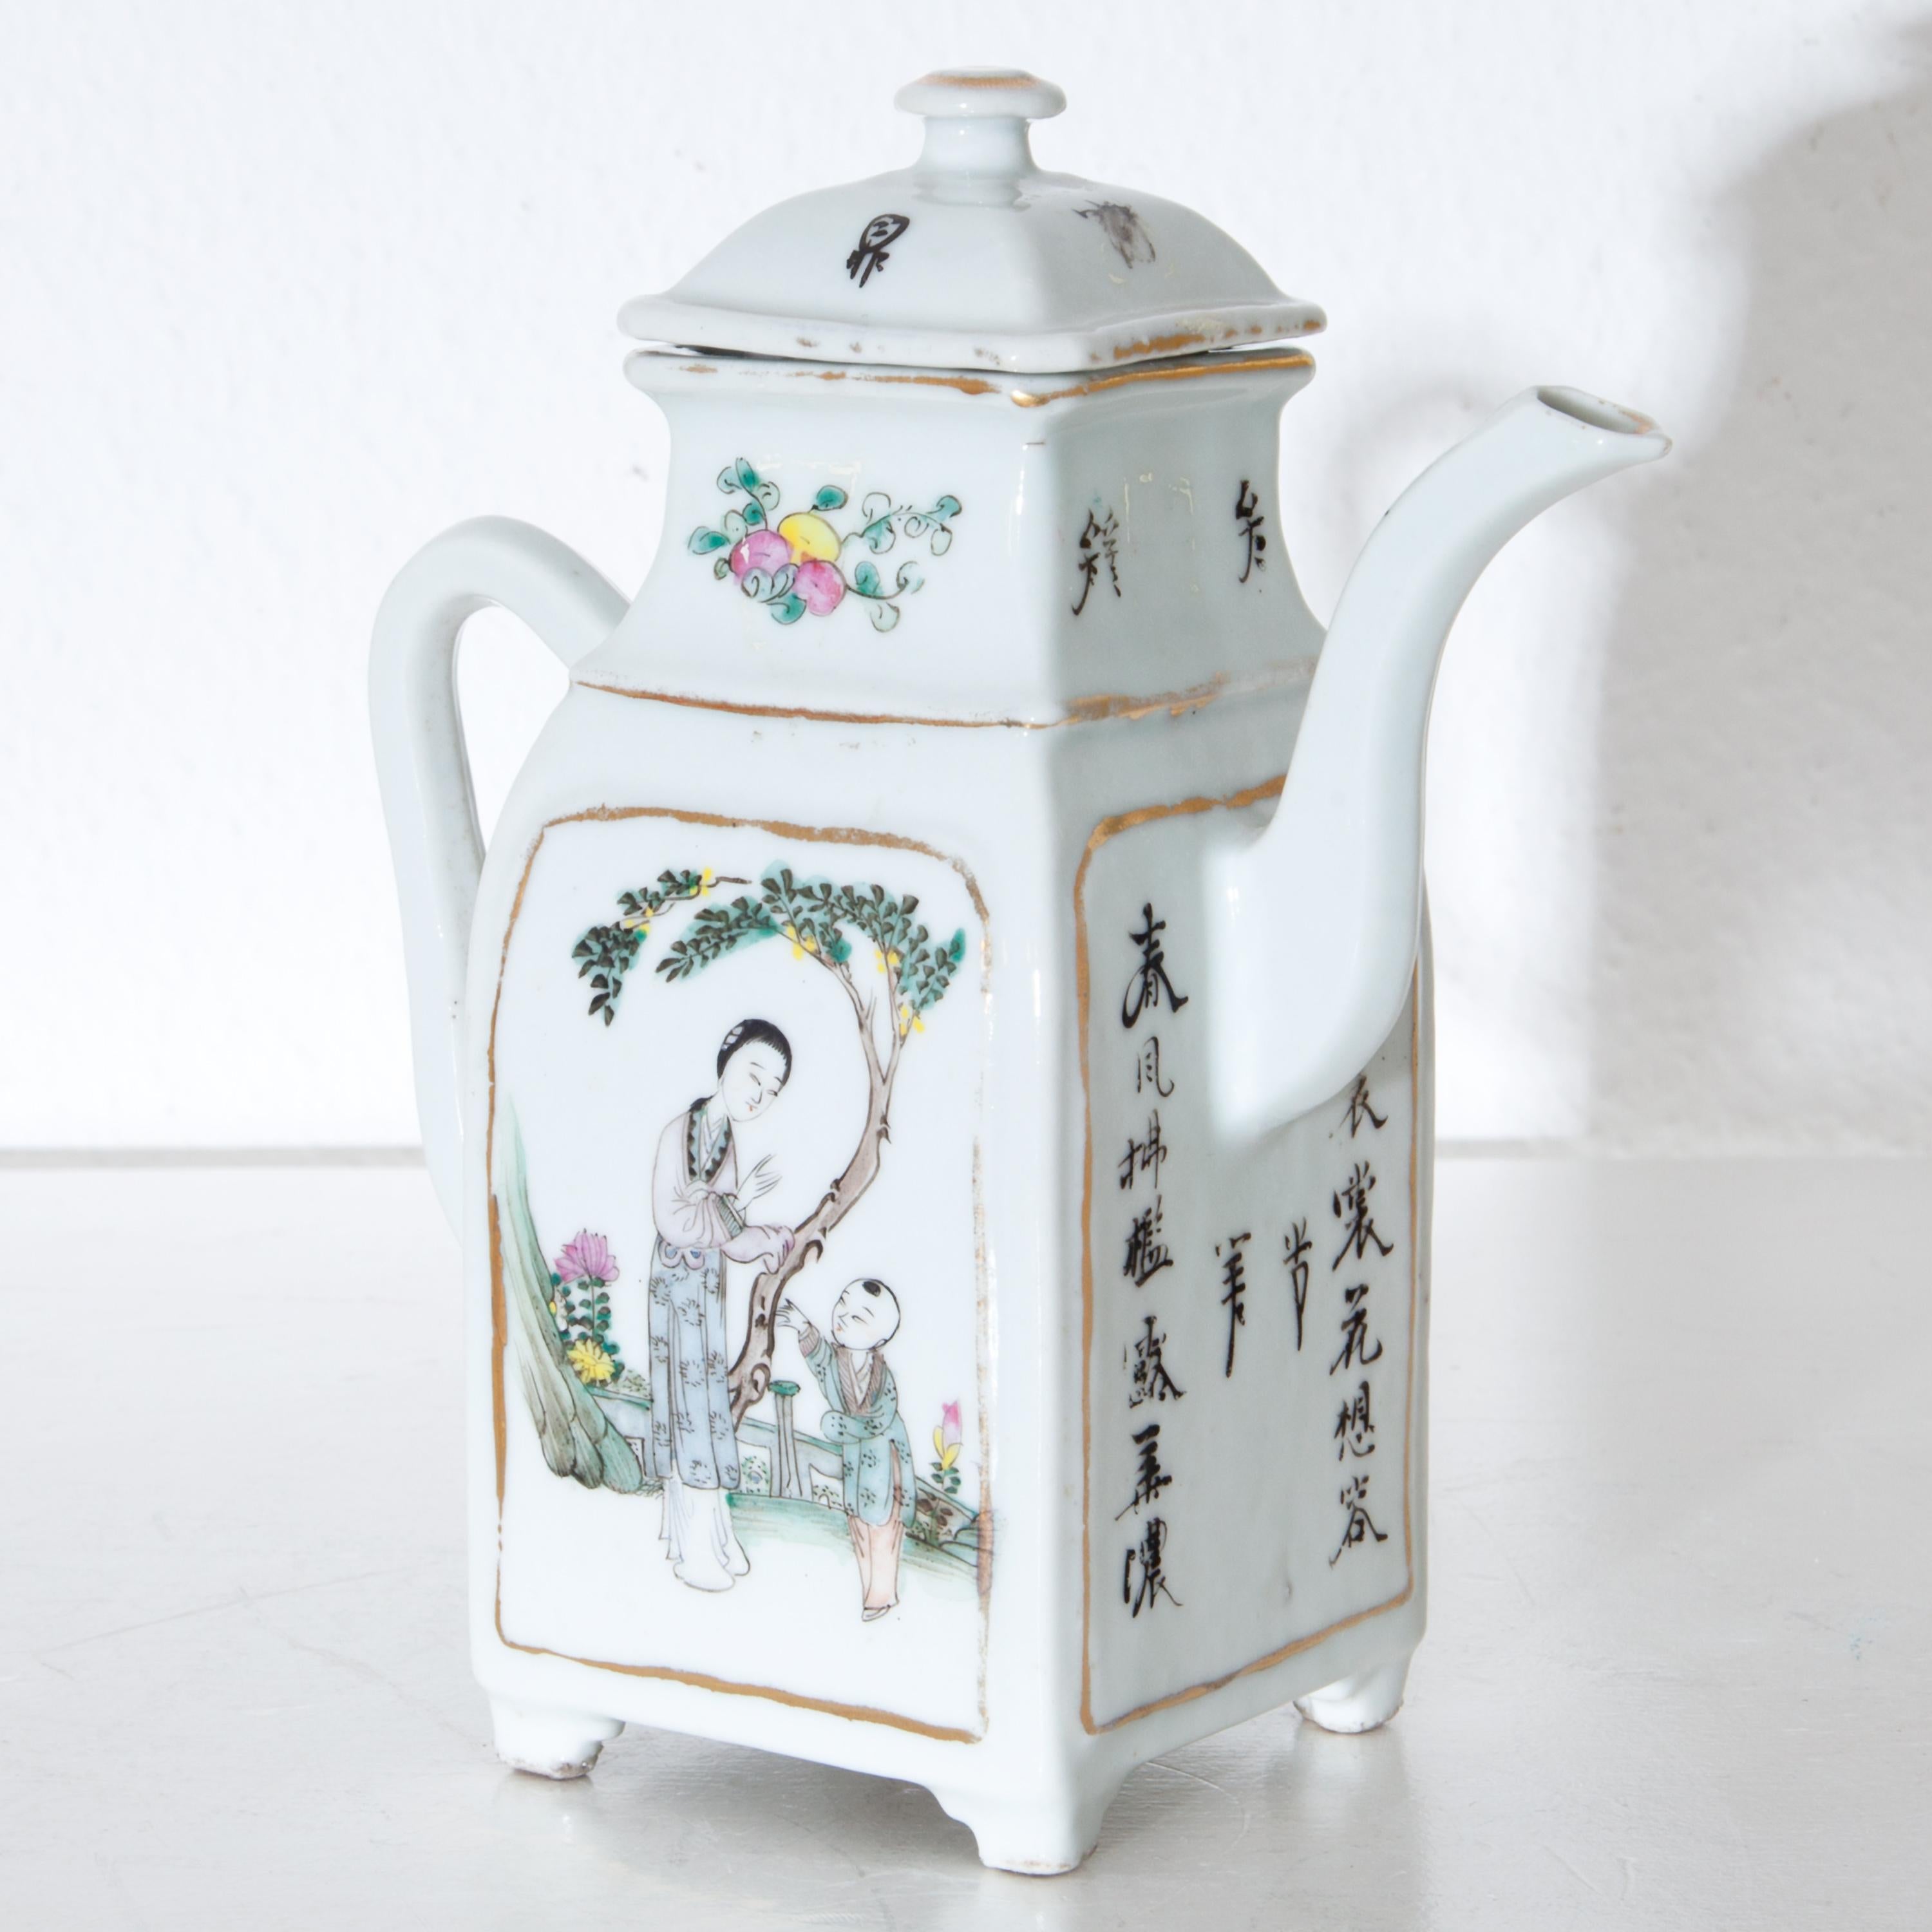 Tongzhi Porcelain Teapot, China, 19th Century 1